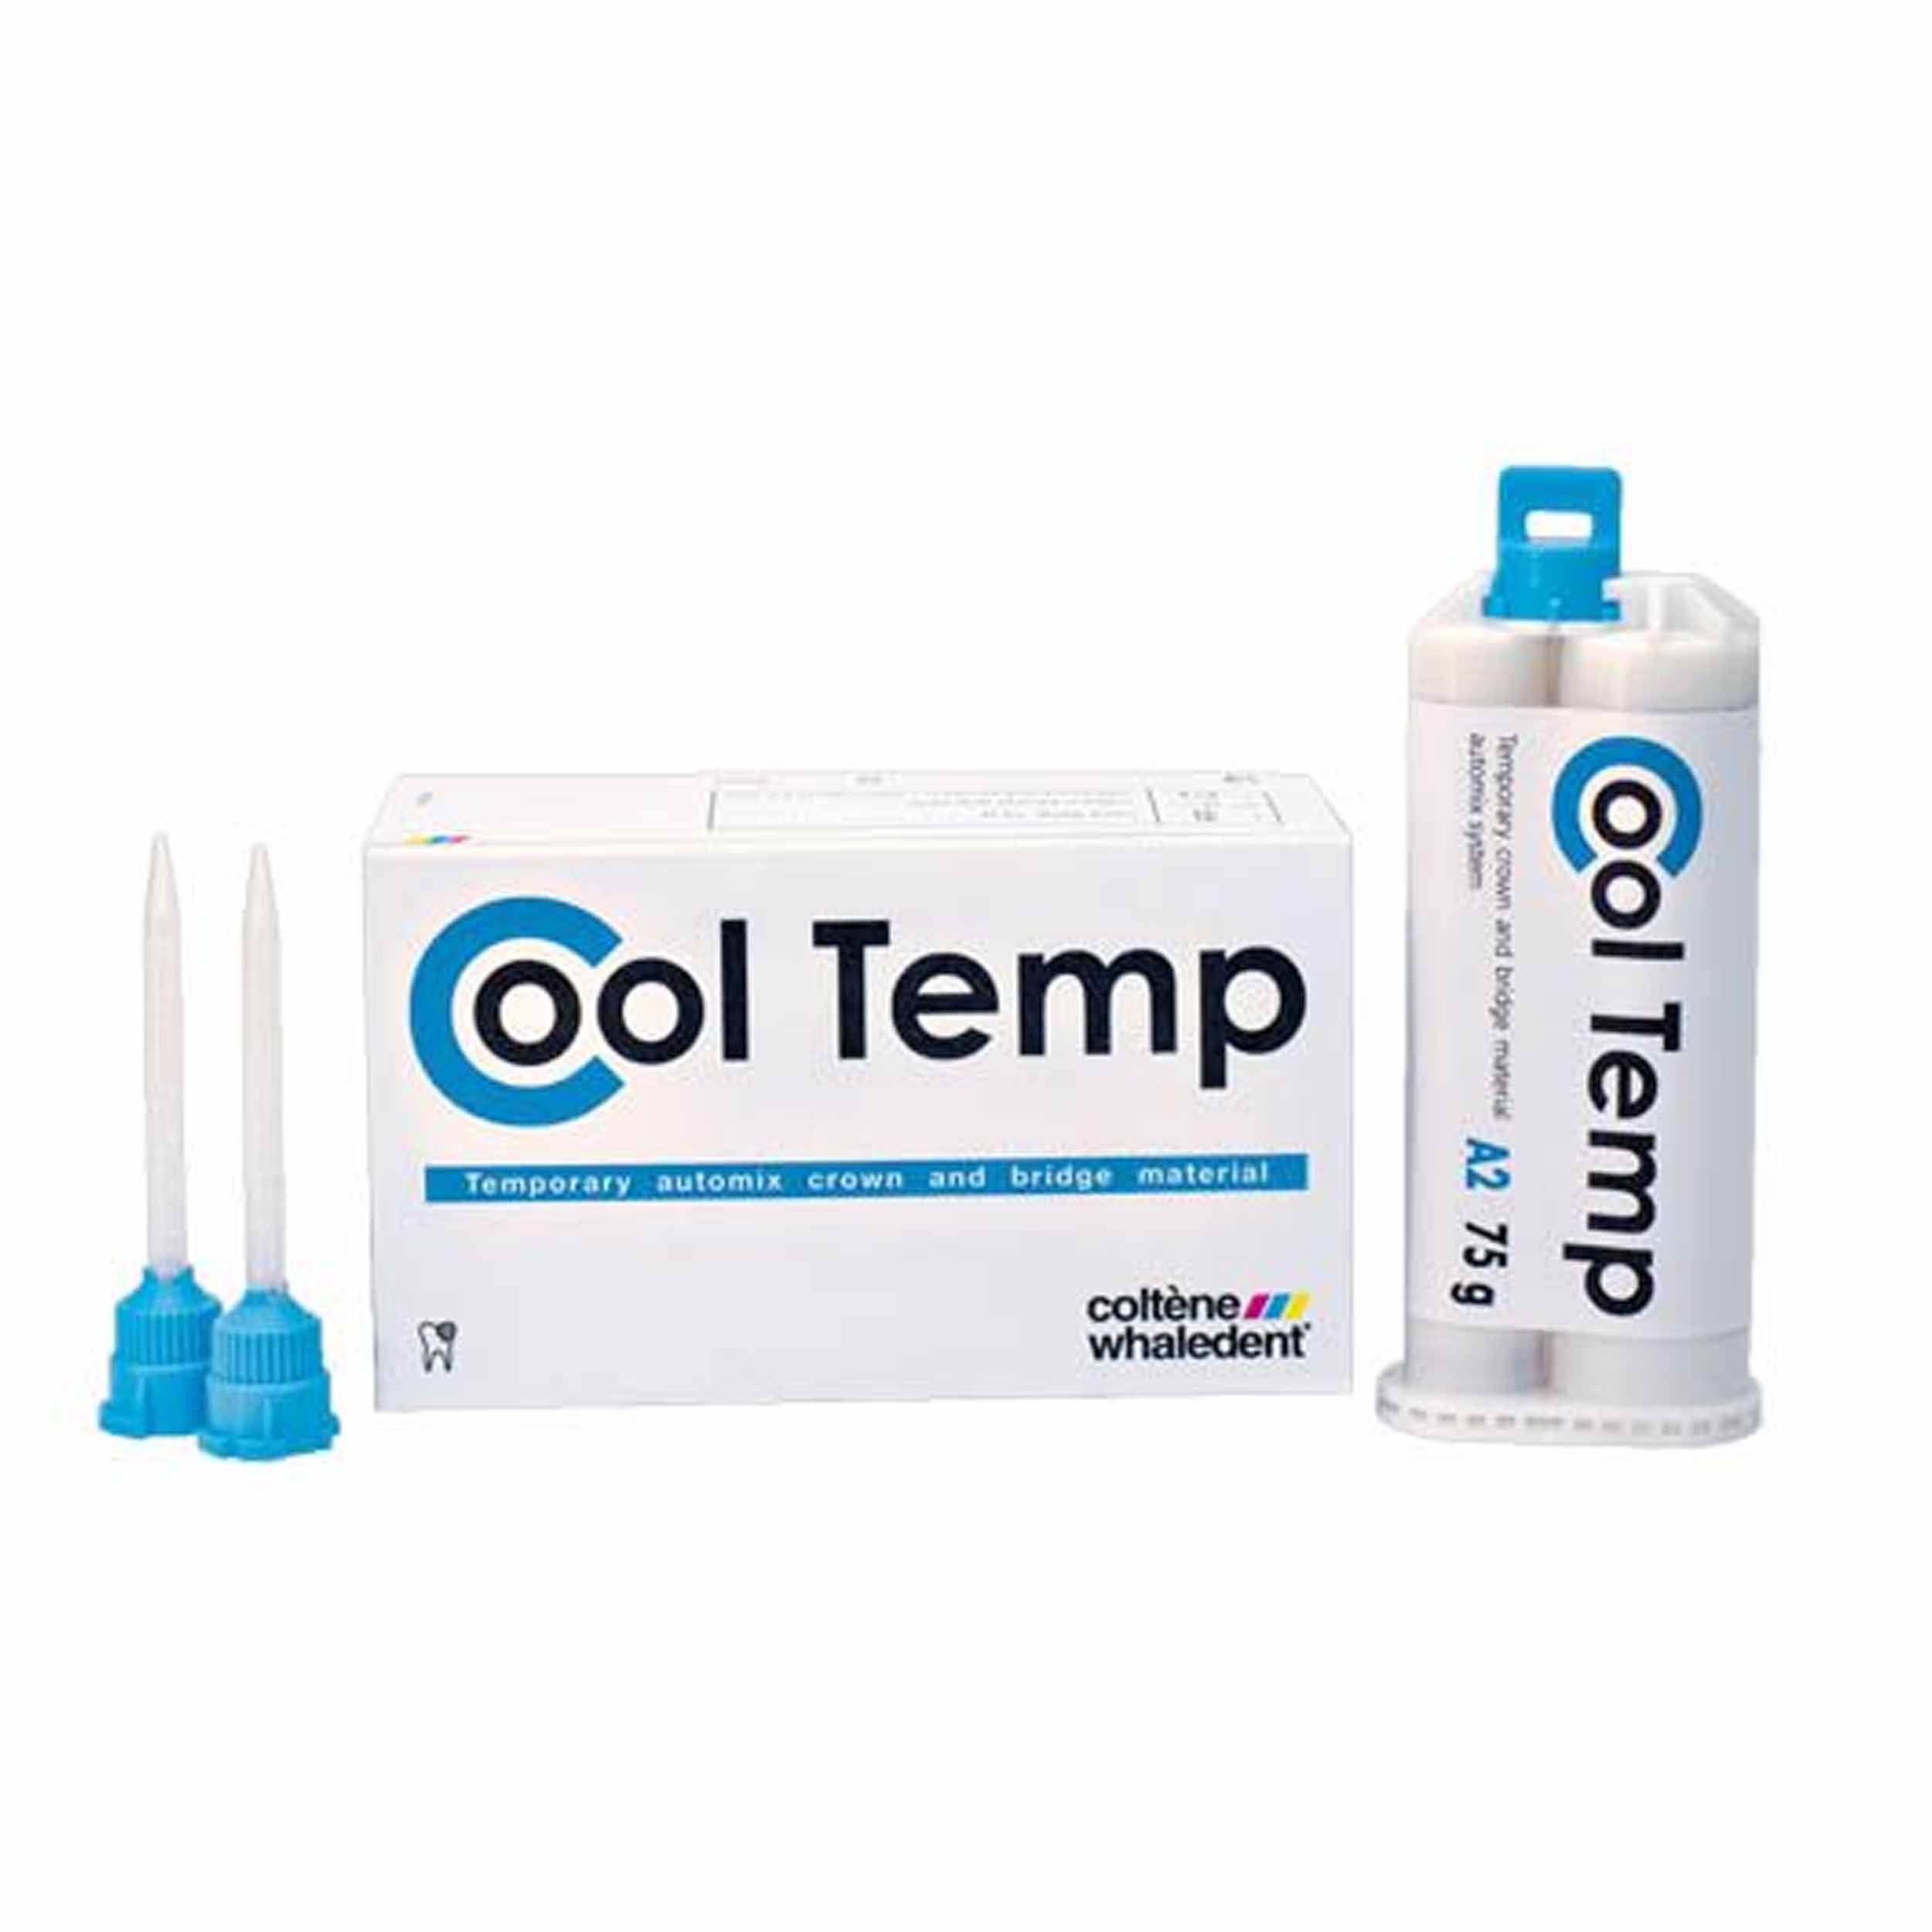 Coltene Cool Temp Dental Temporary Crown Bridge Material